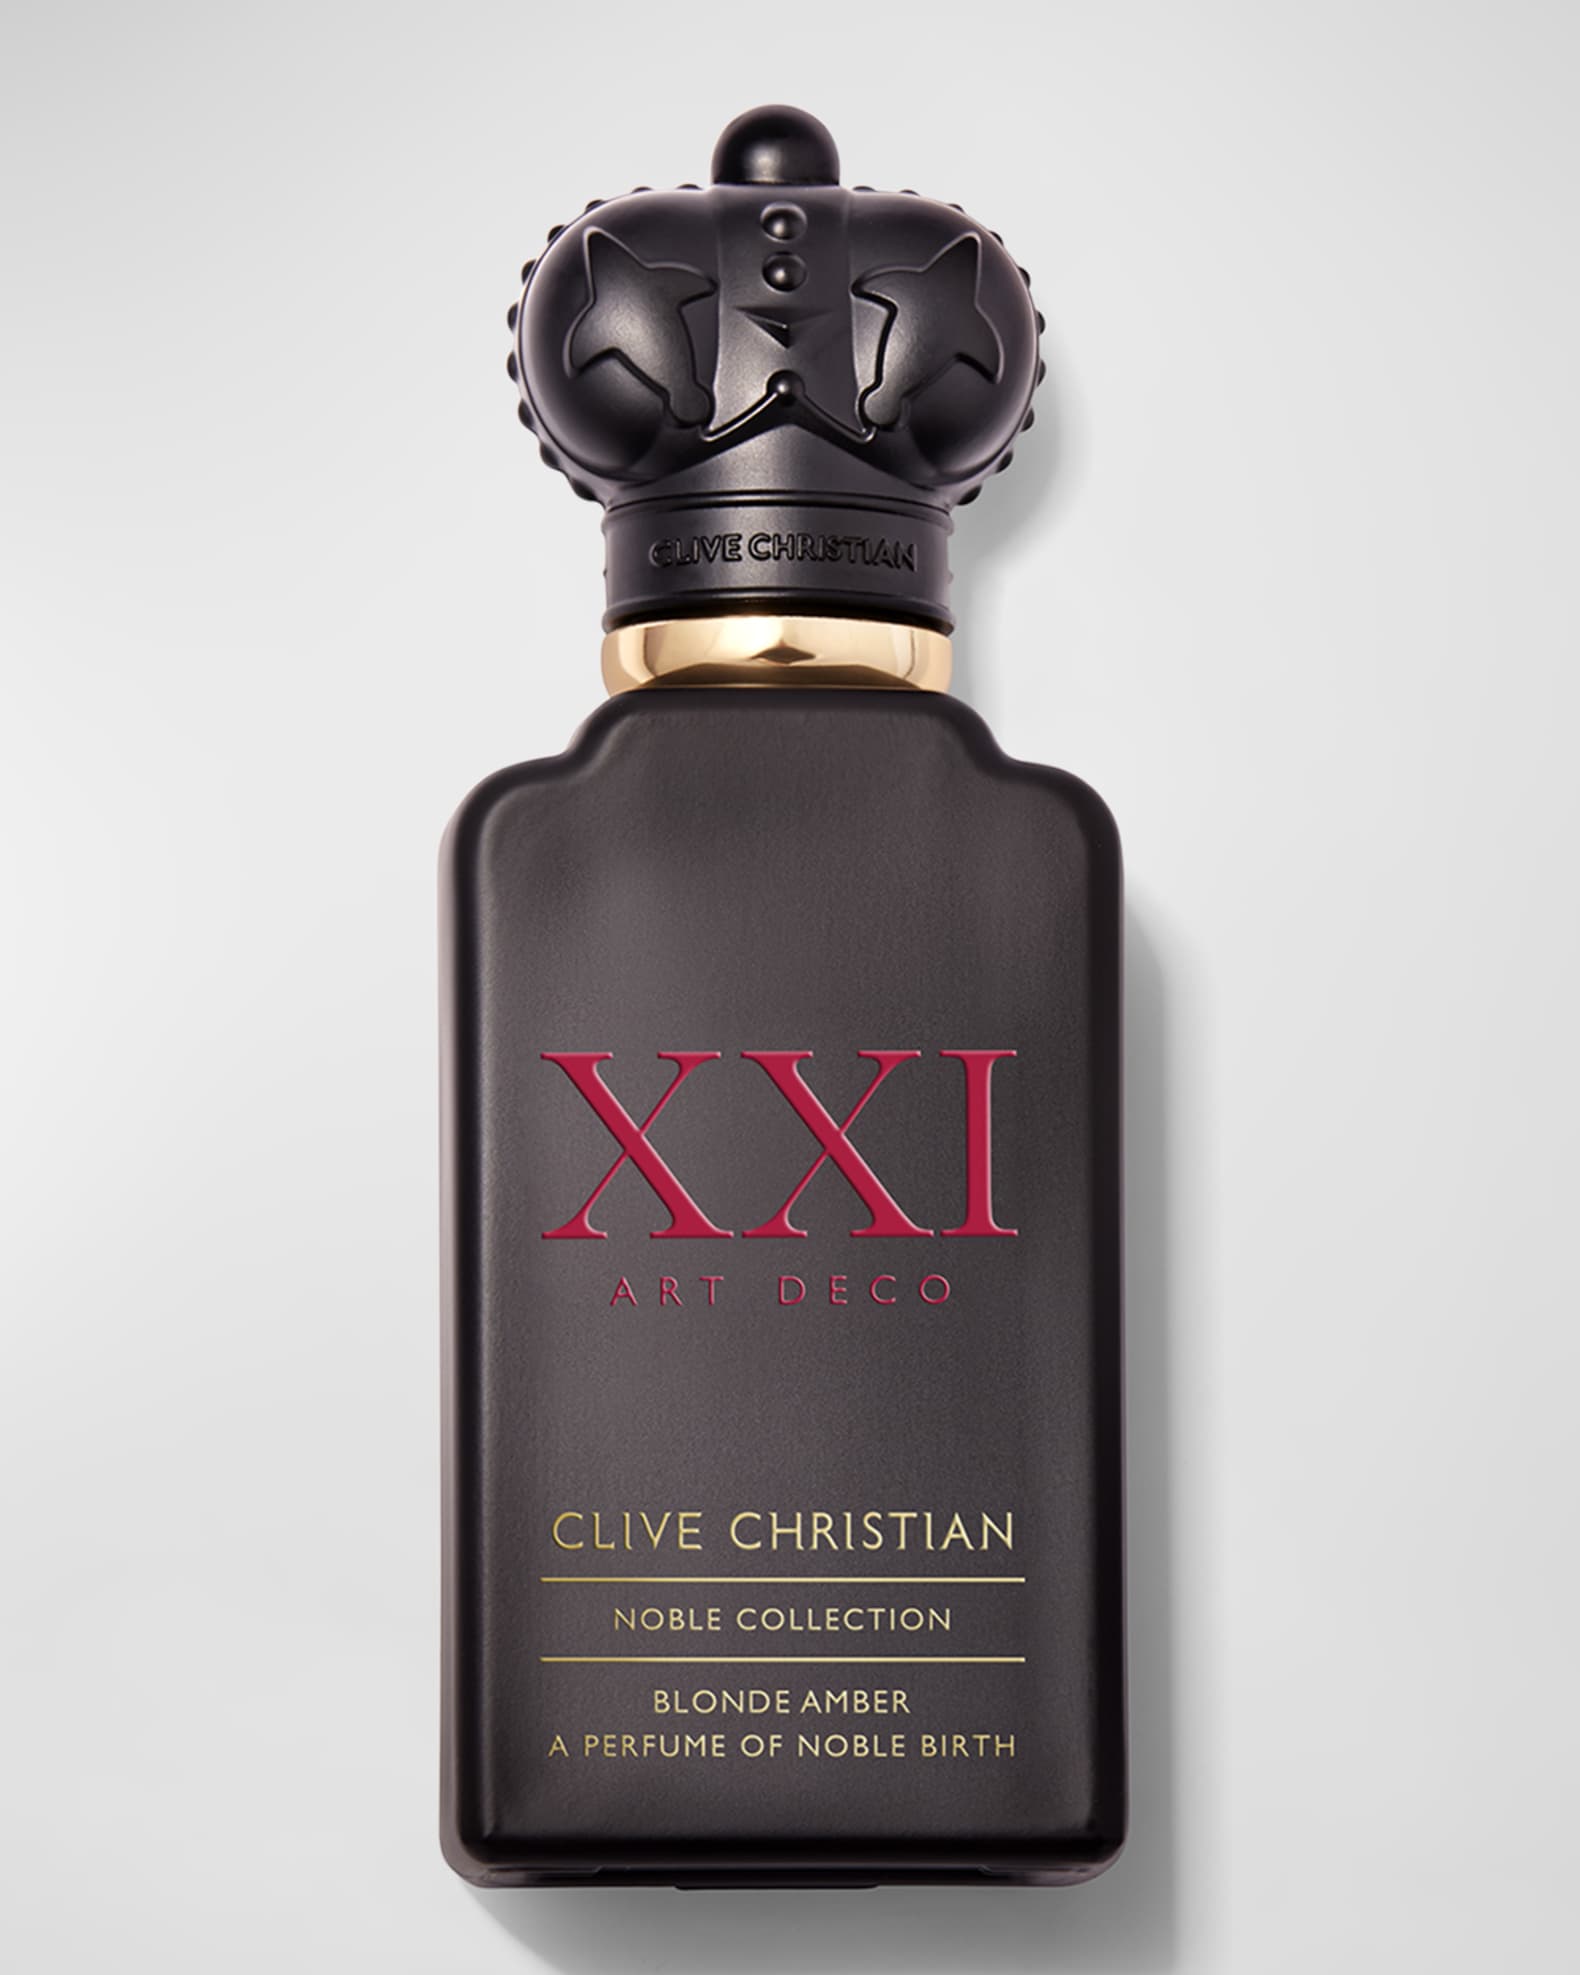 Clive Christian Art Deco Blonde Amber perfume